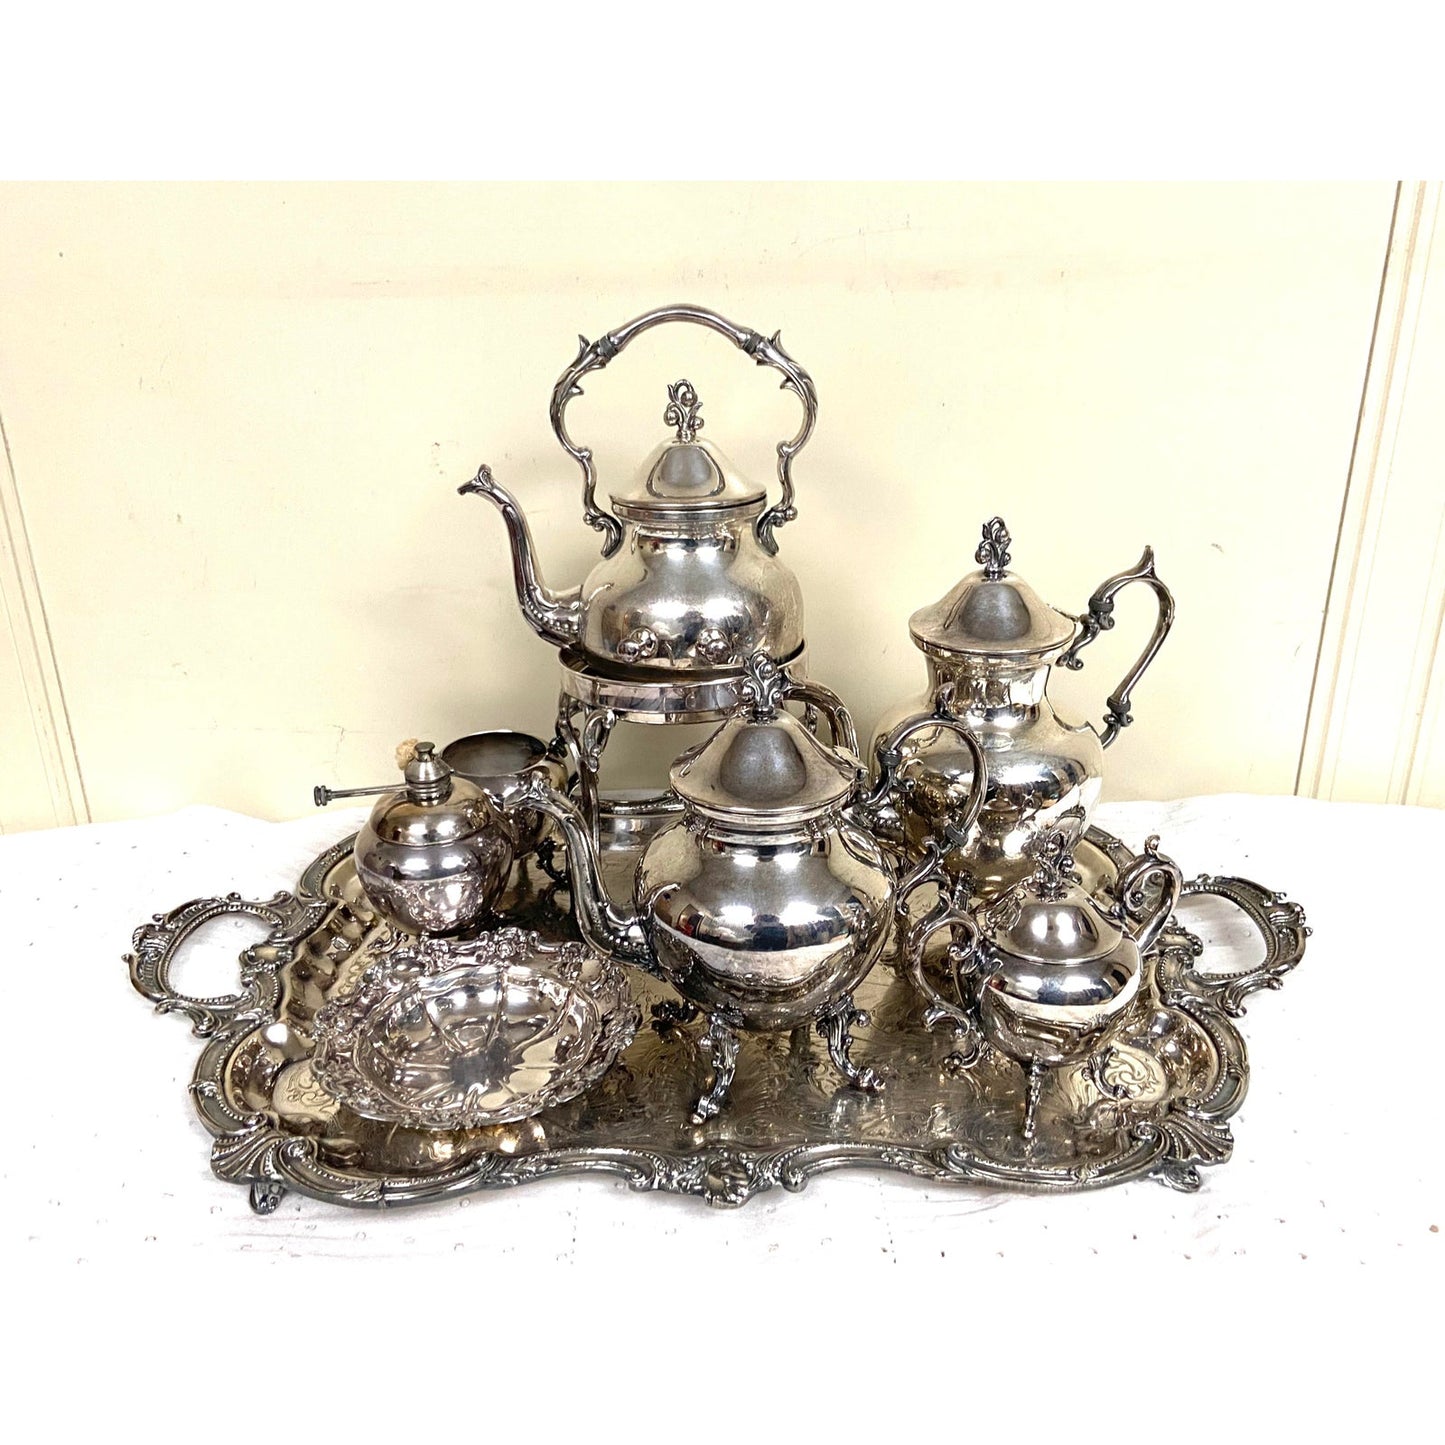 [ON HOLD] Vintage Victorian Silver Tea Service Set - 14 Piece